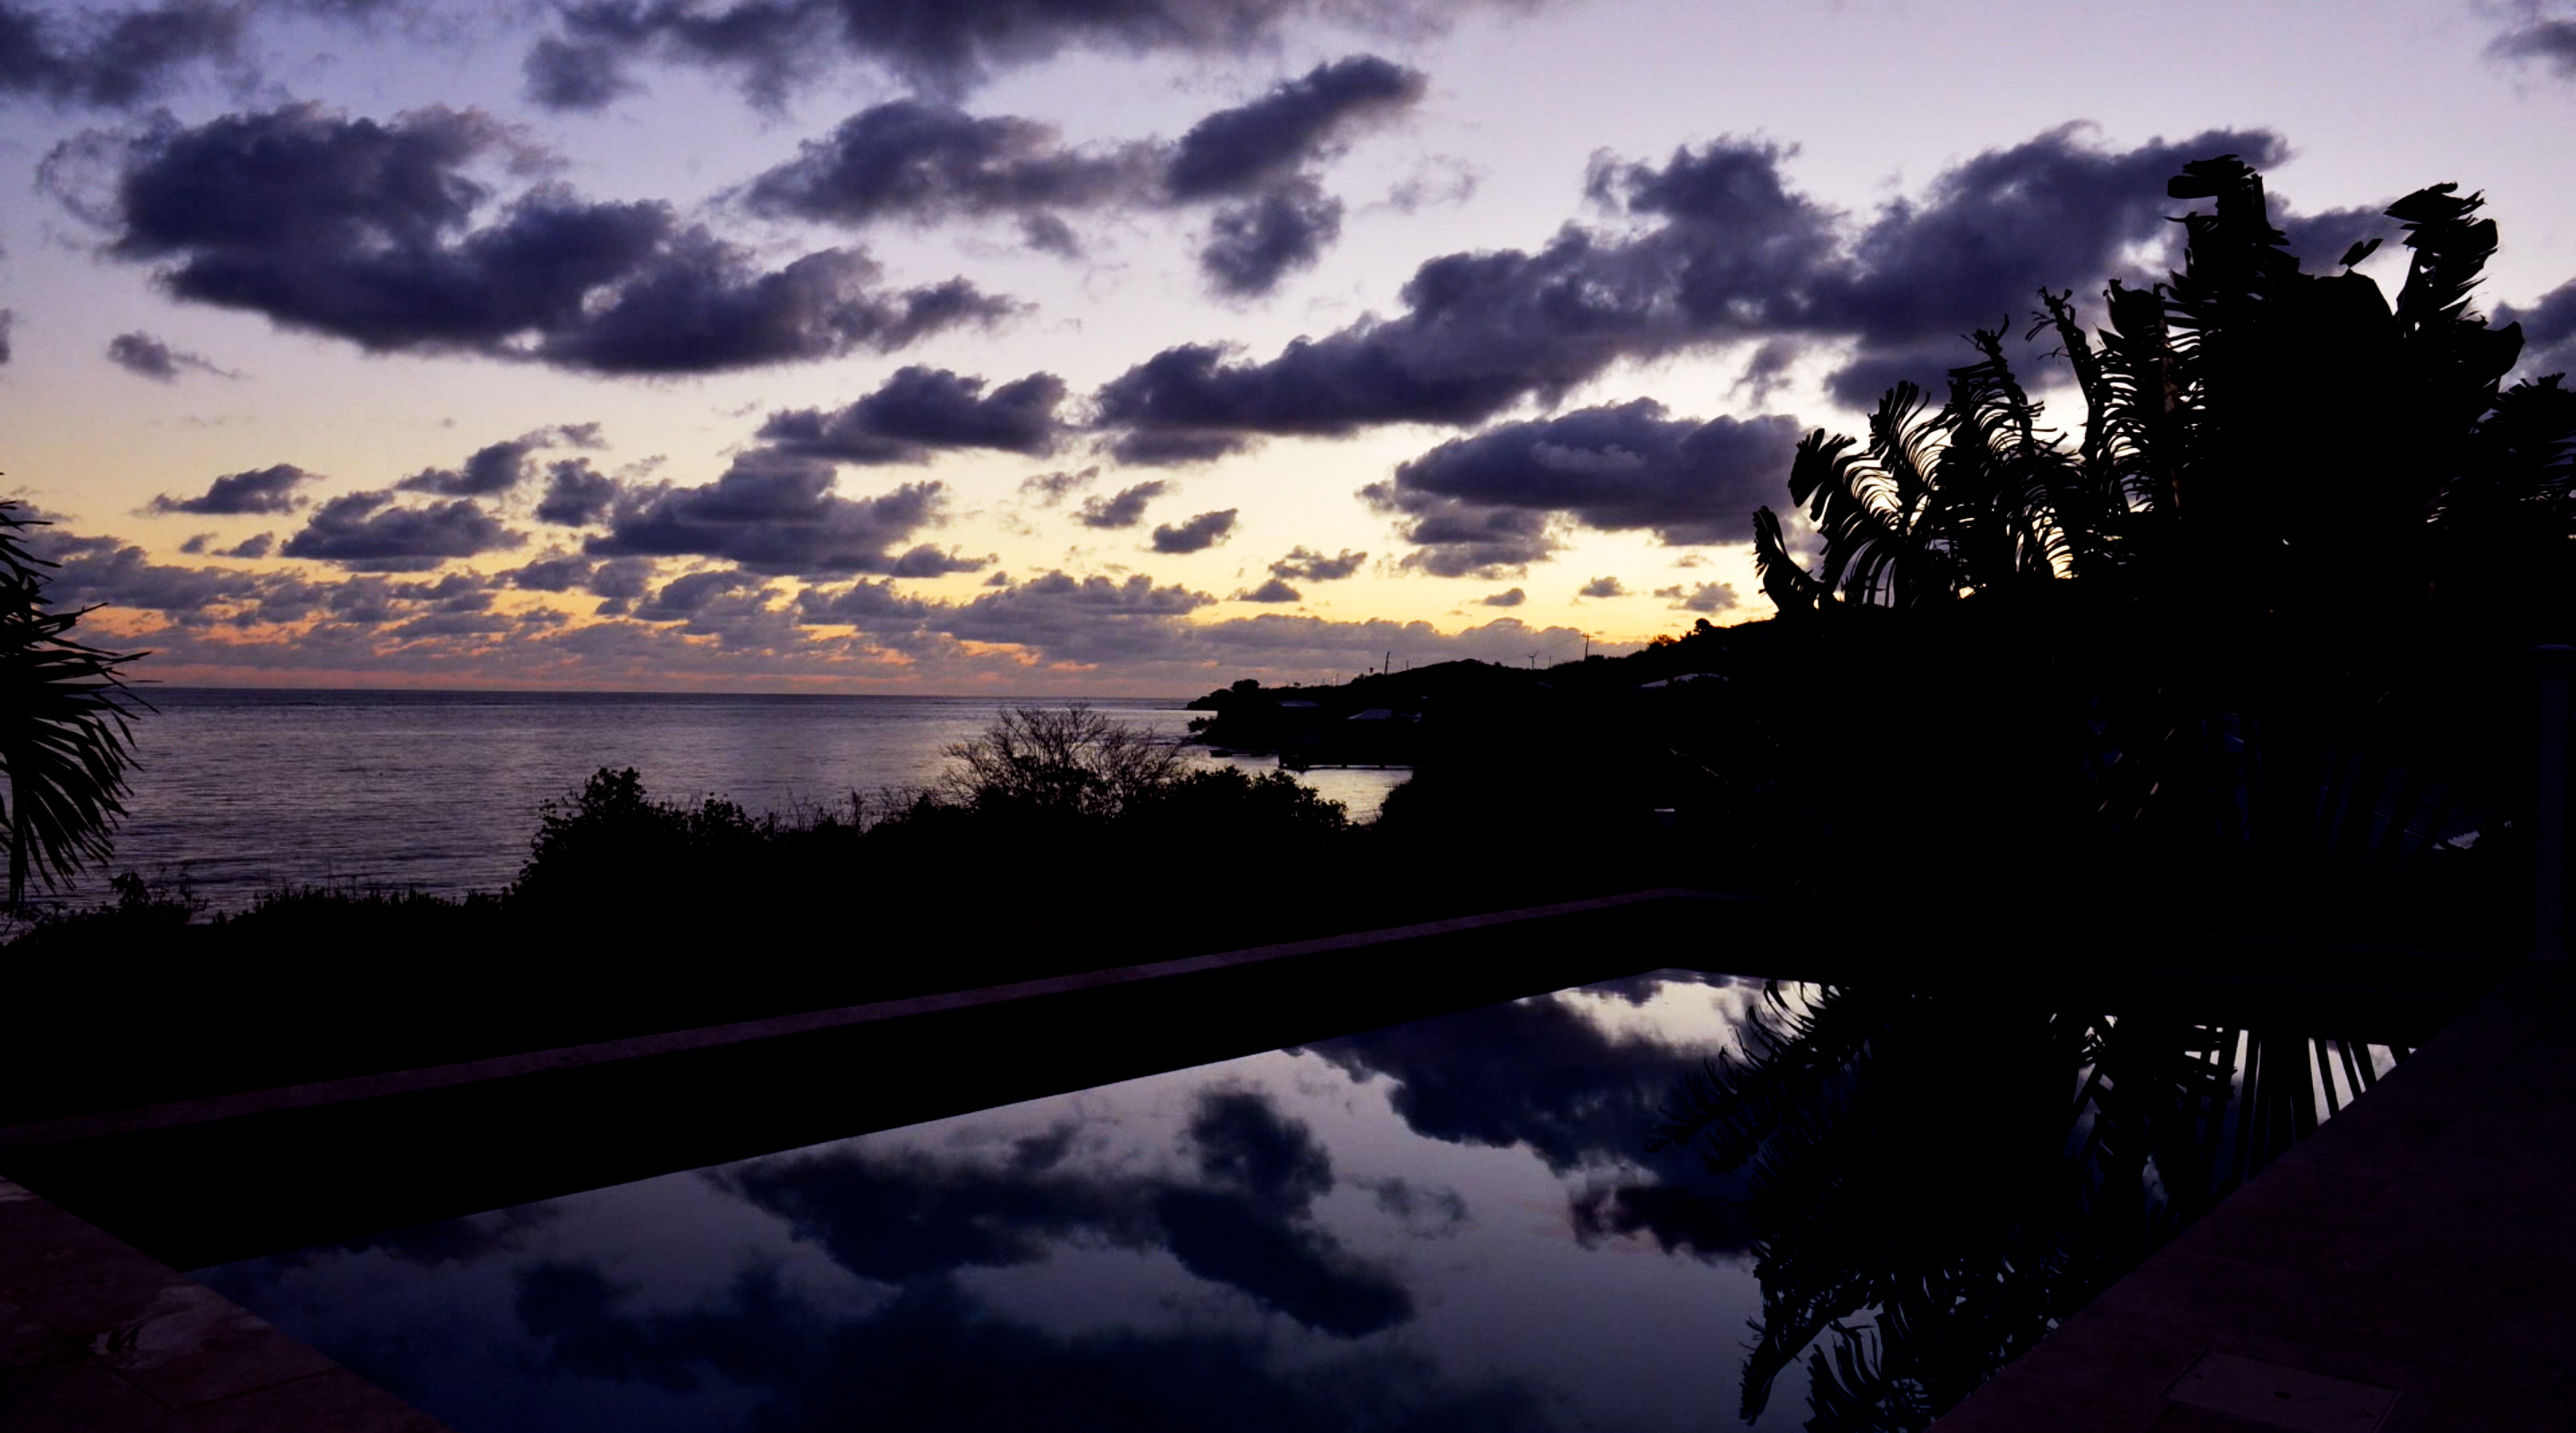 Sunrise in Solitude, St. Croix by Patrick Bennett